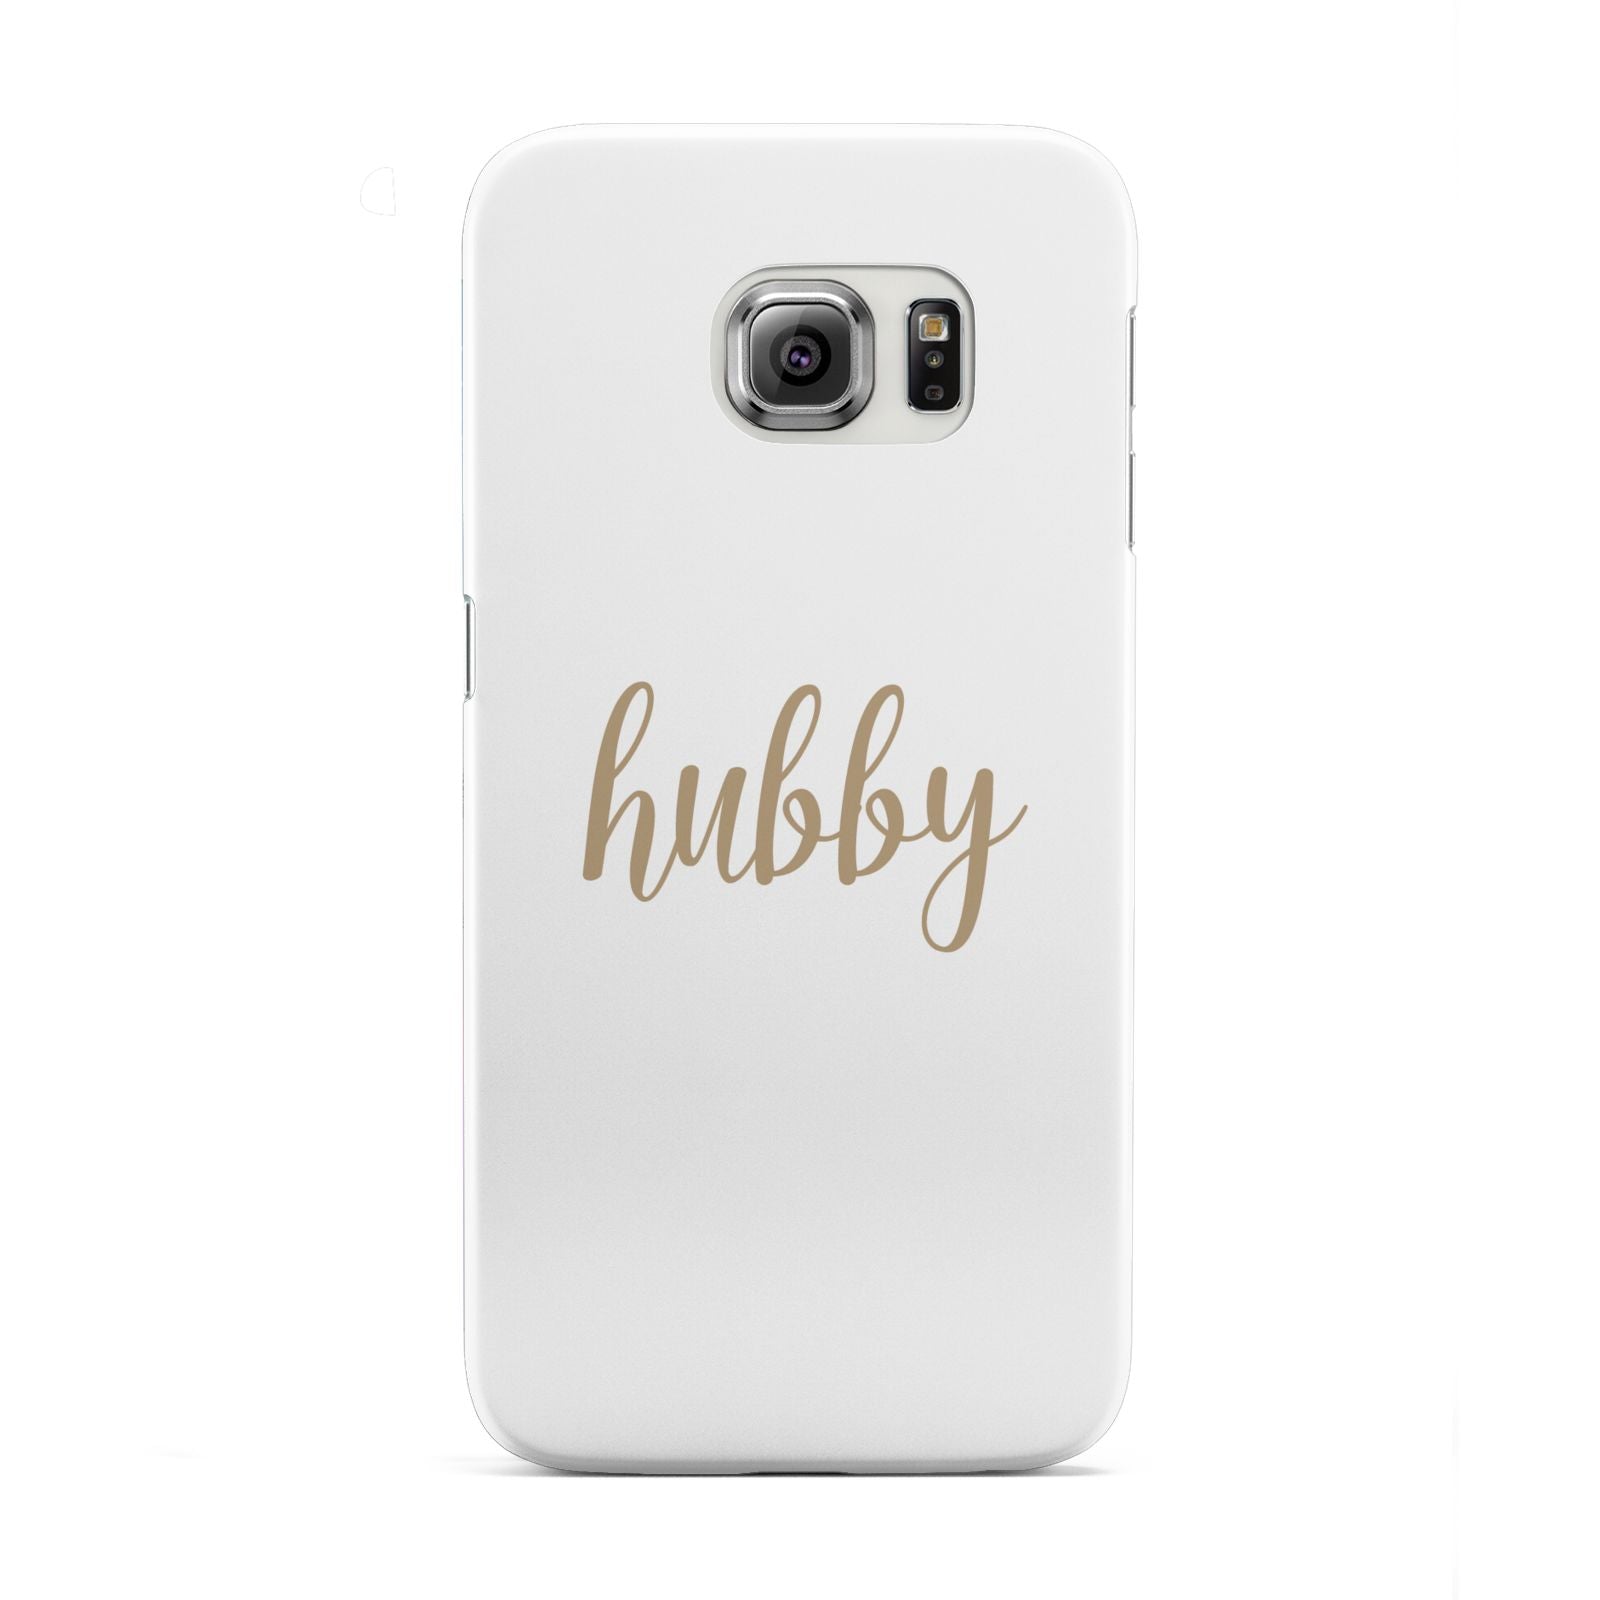 Hubby Samsung Galaxy S6 Edge Case